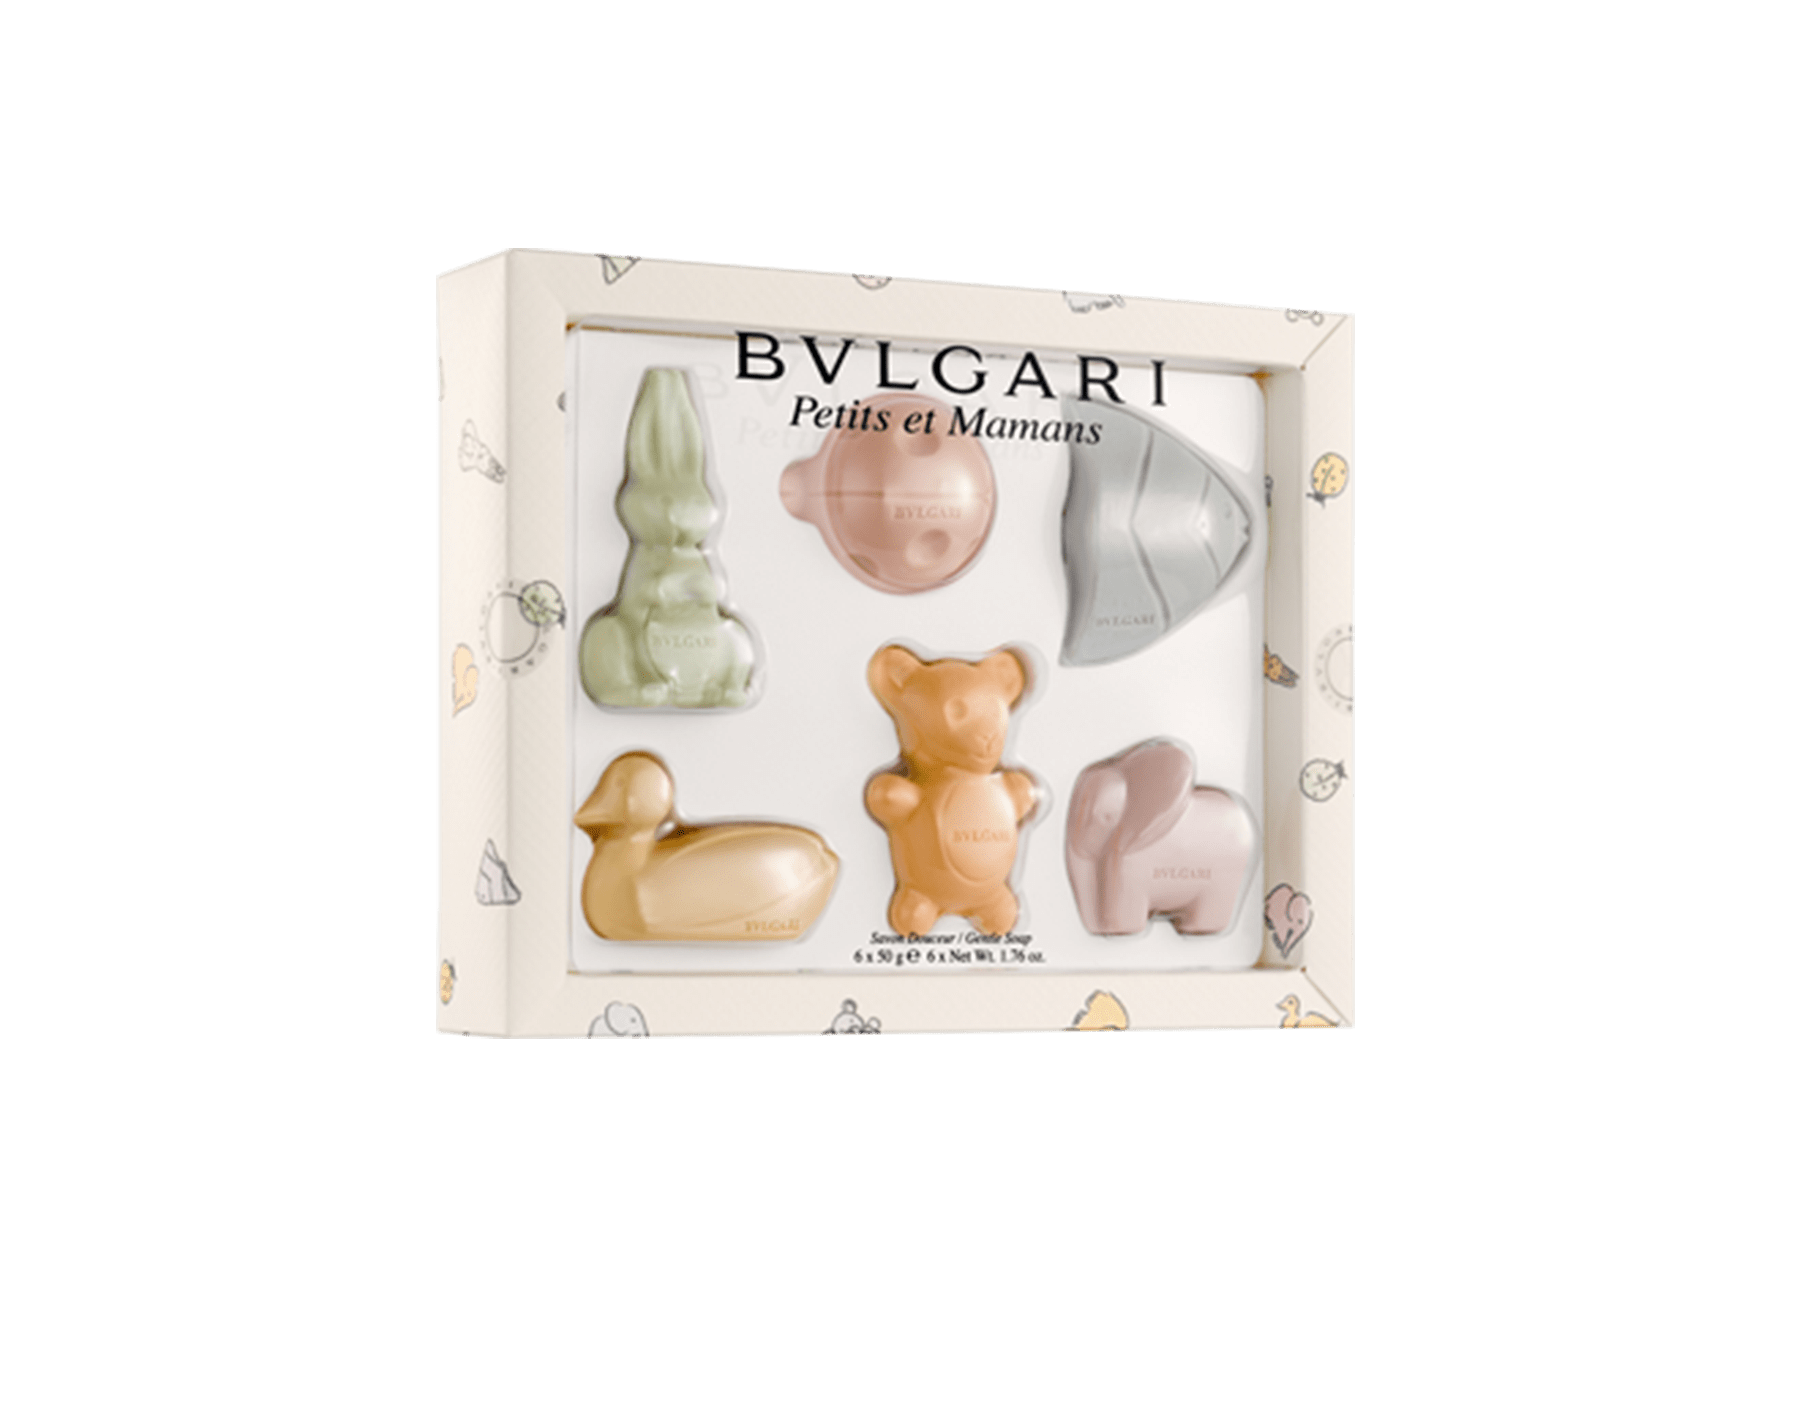 bvlgari soap set